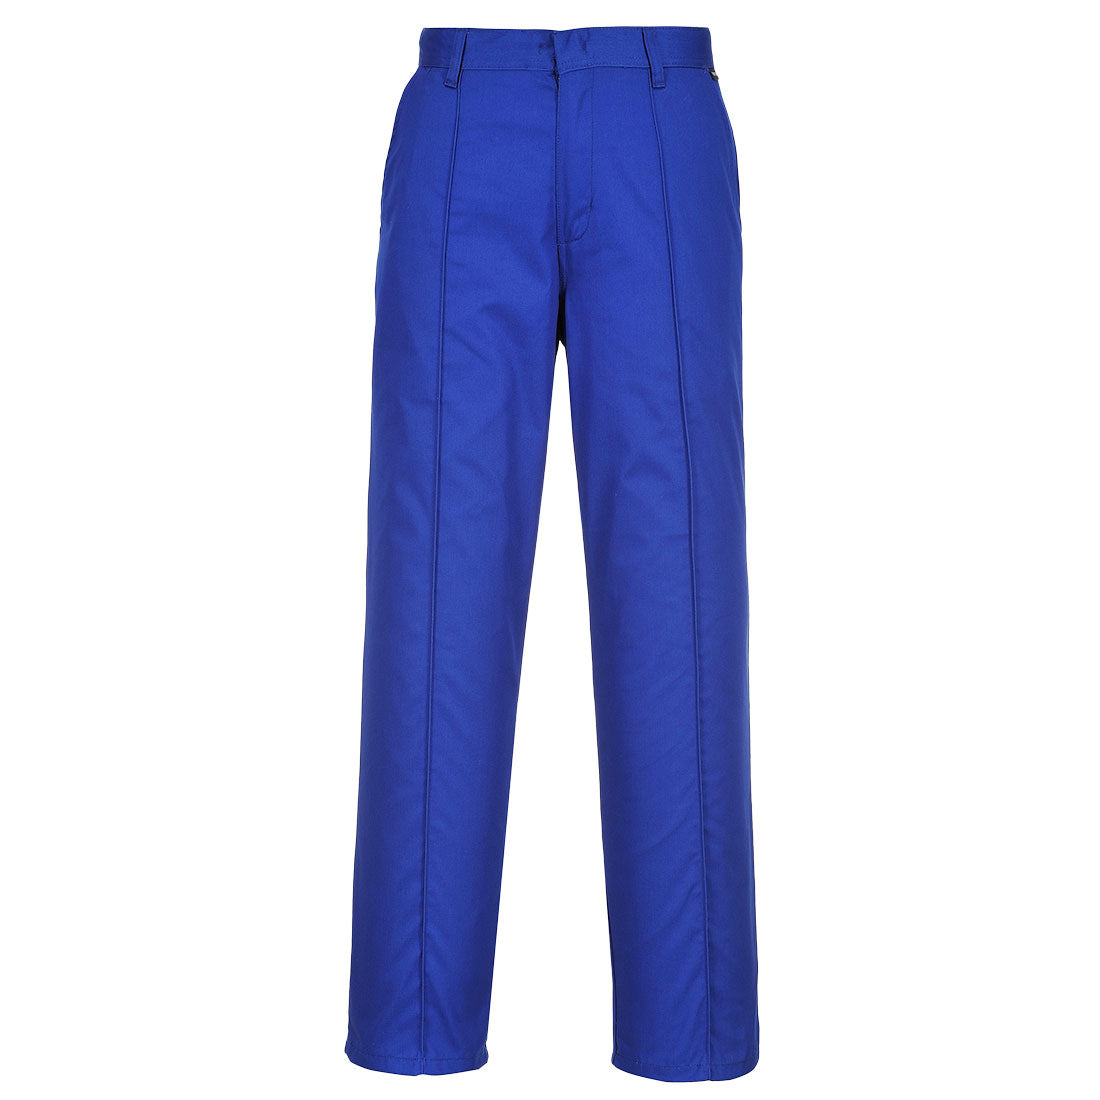 Portwest 2885 - Royal Blue Preston Mens Work Trousers with Side Pockets sz 30" Regular